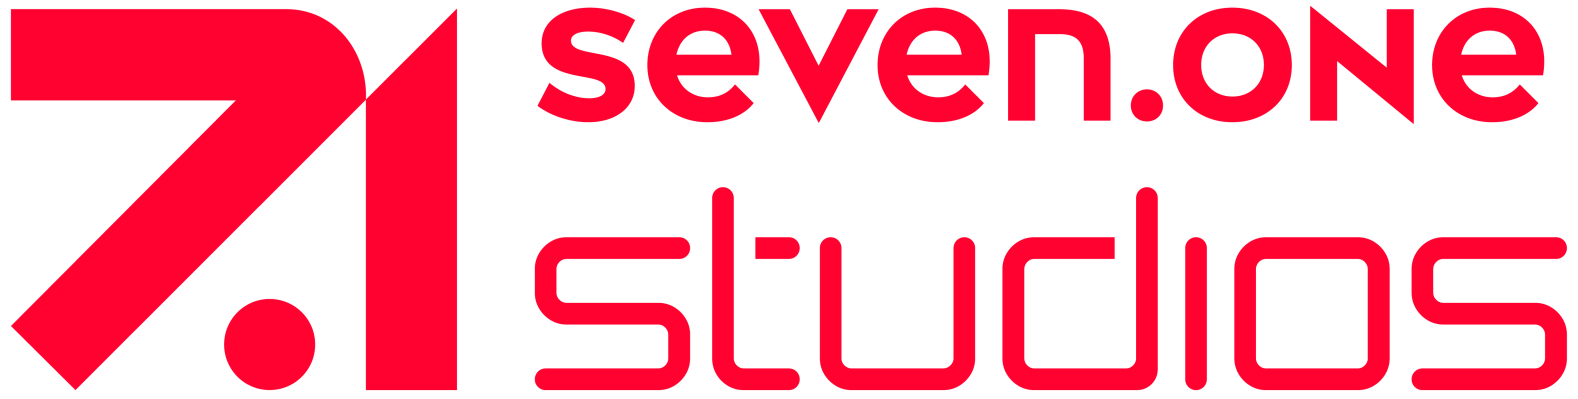 redArrow logo